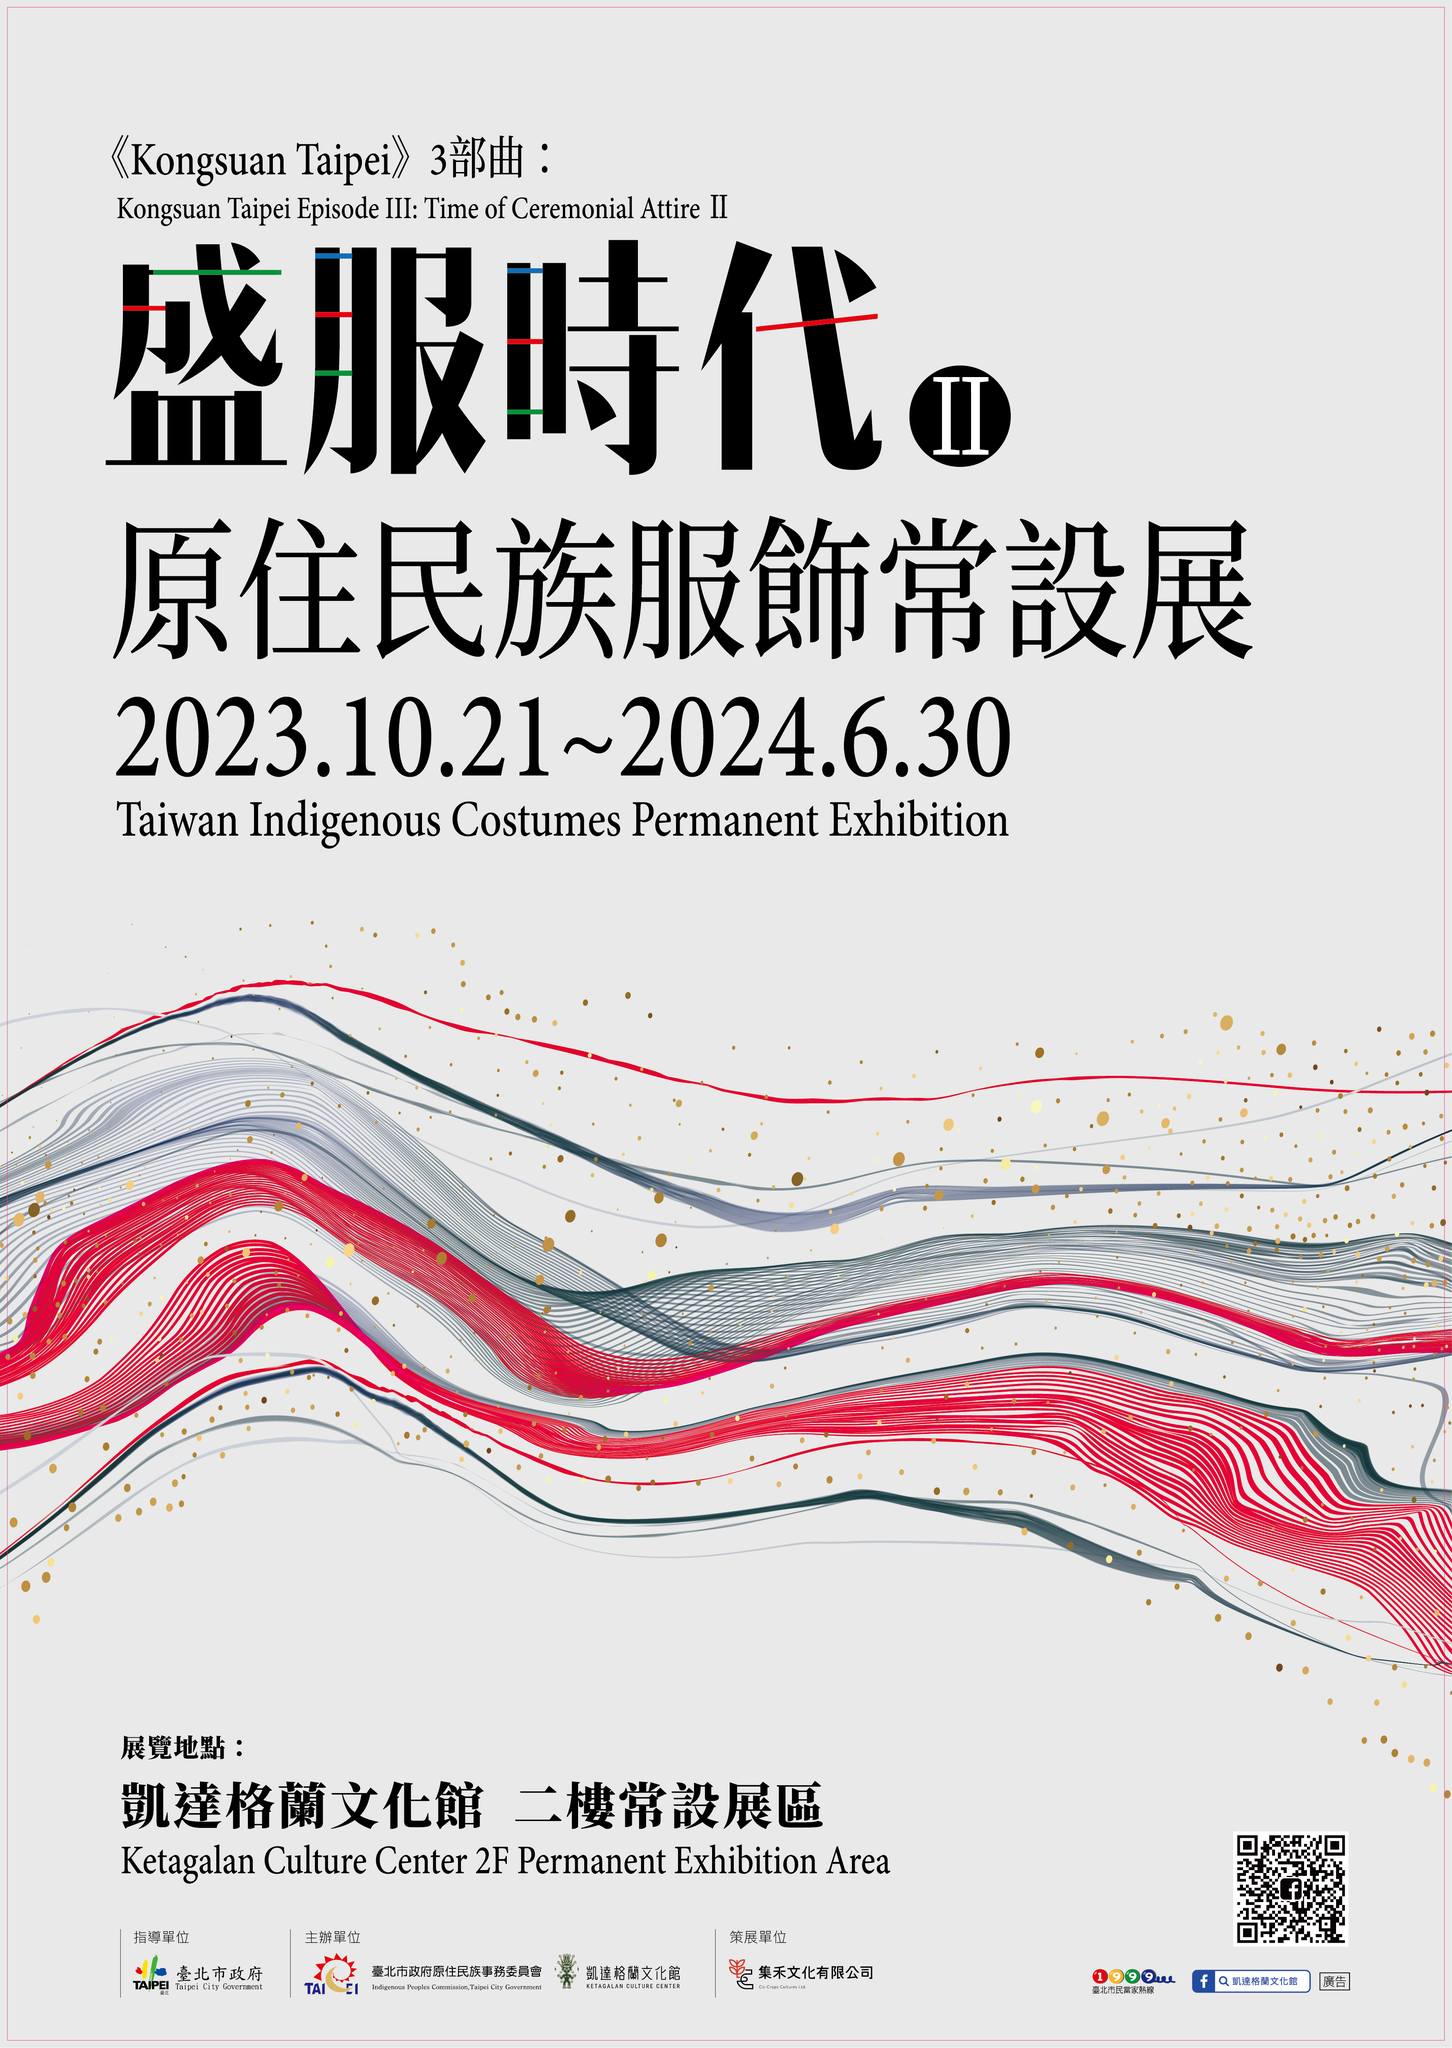 2023《Kongsuan Taipei》參部曲 《盛服時代II》特展